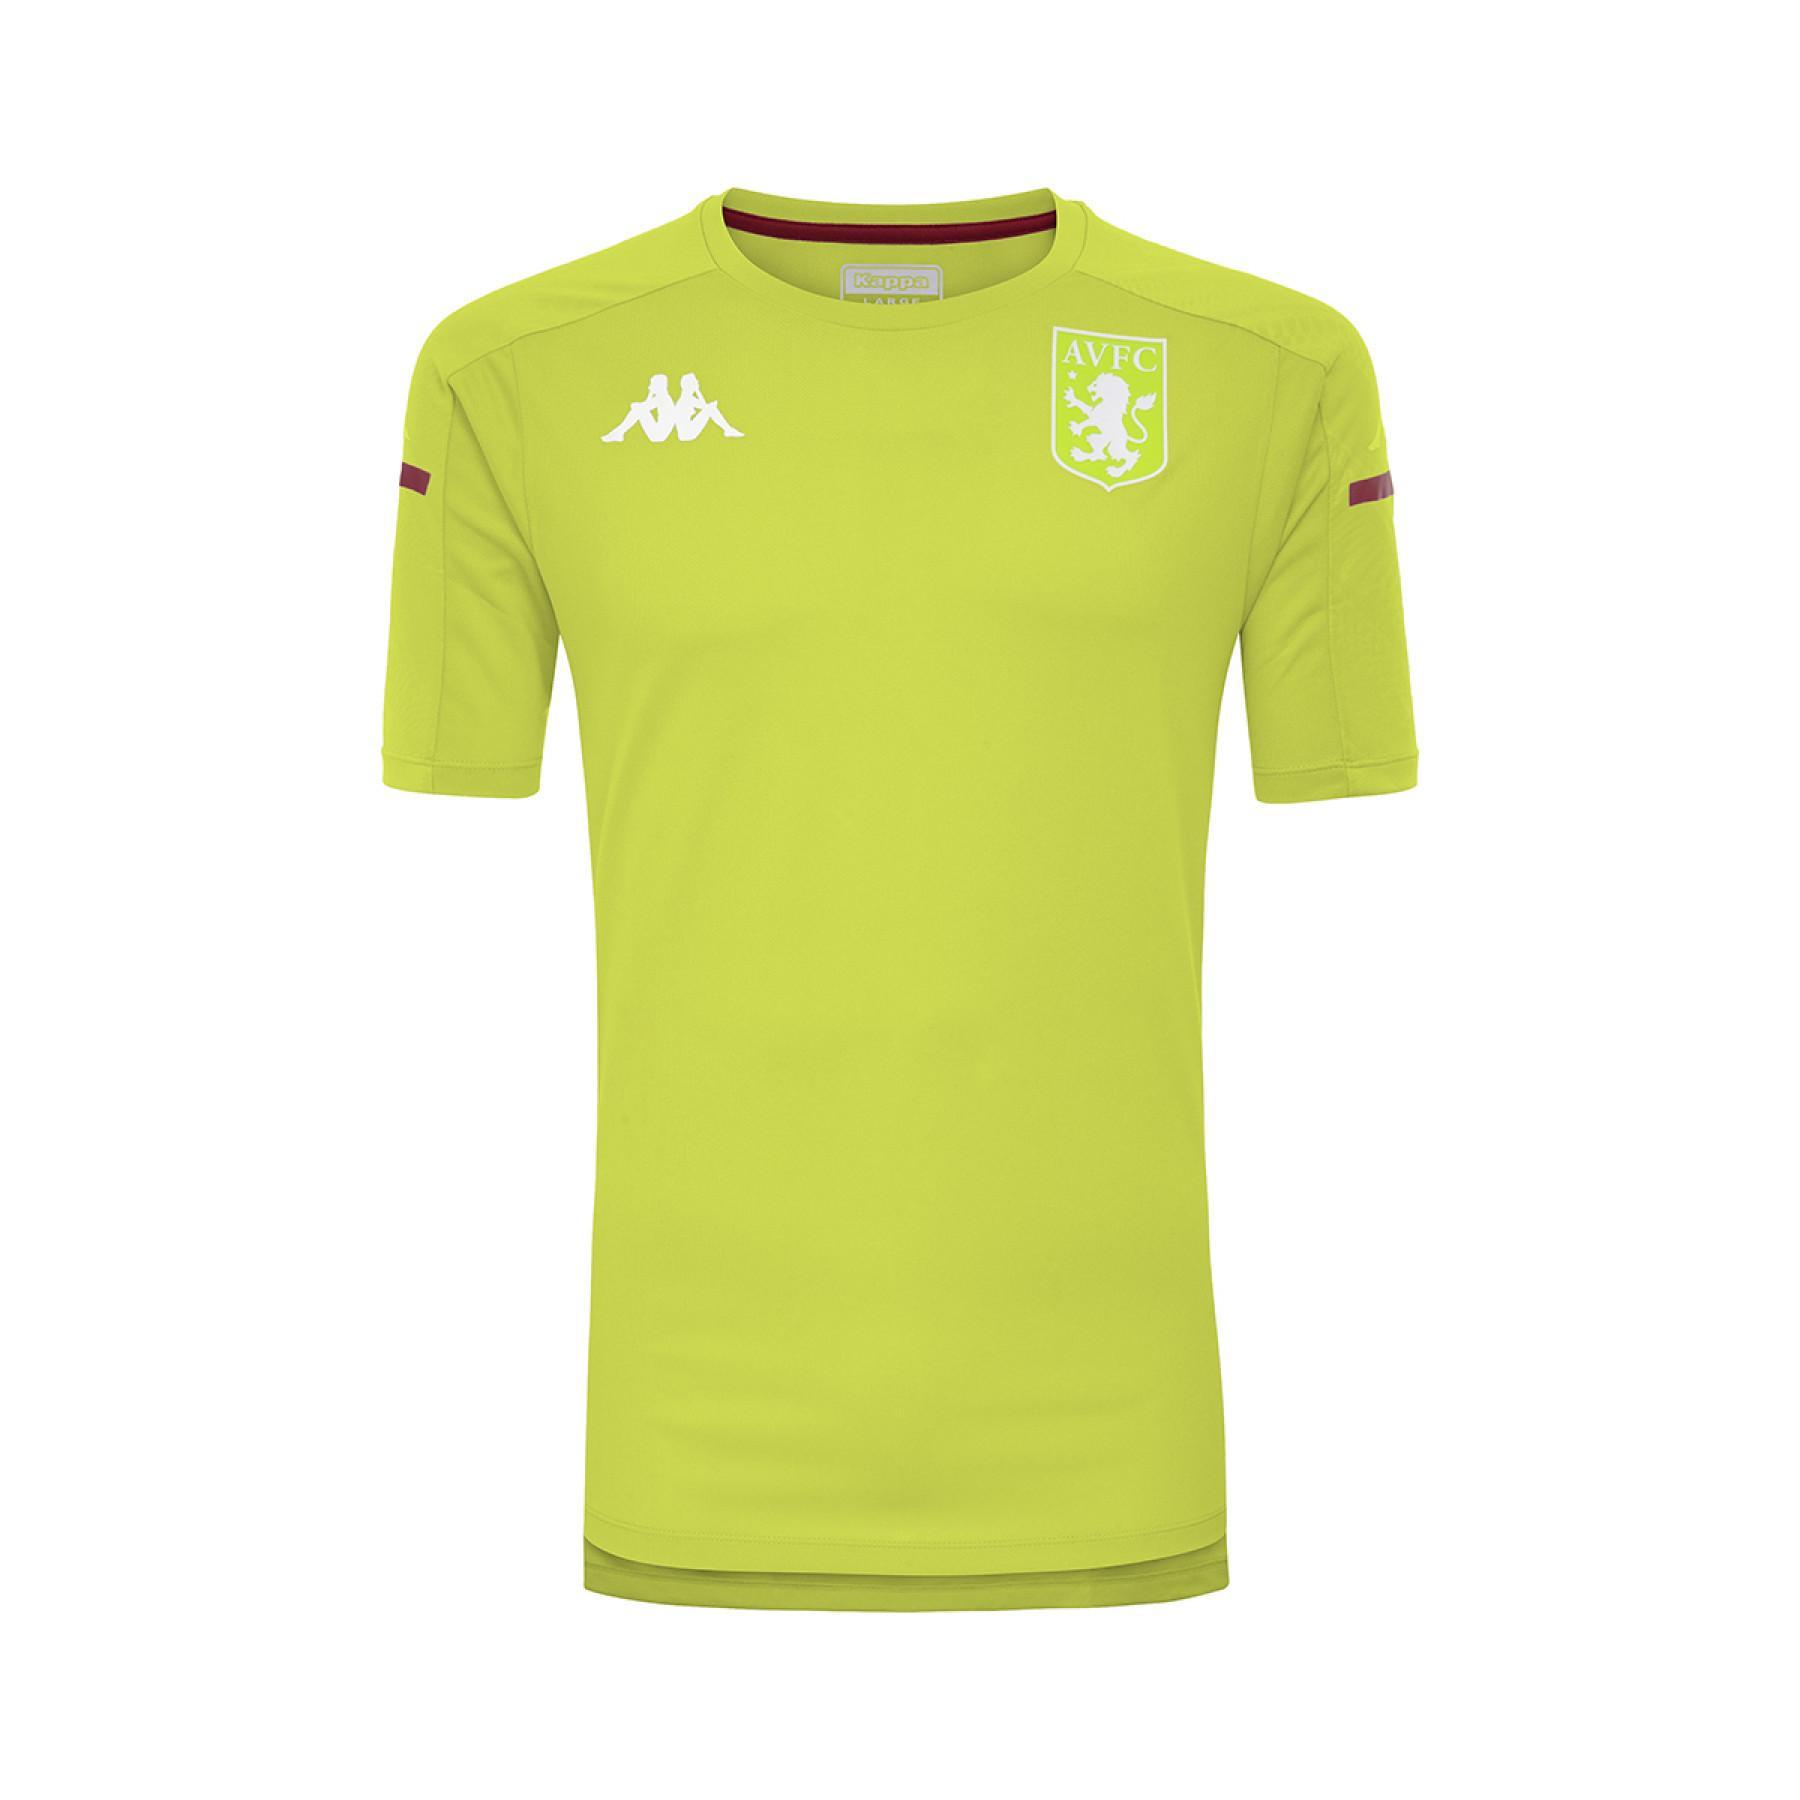 Camiseta para niños Aston Villa FC 2020/21 aboes pro 4